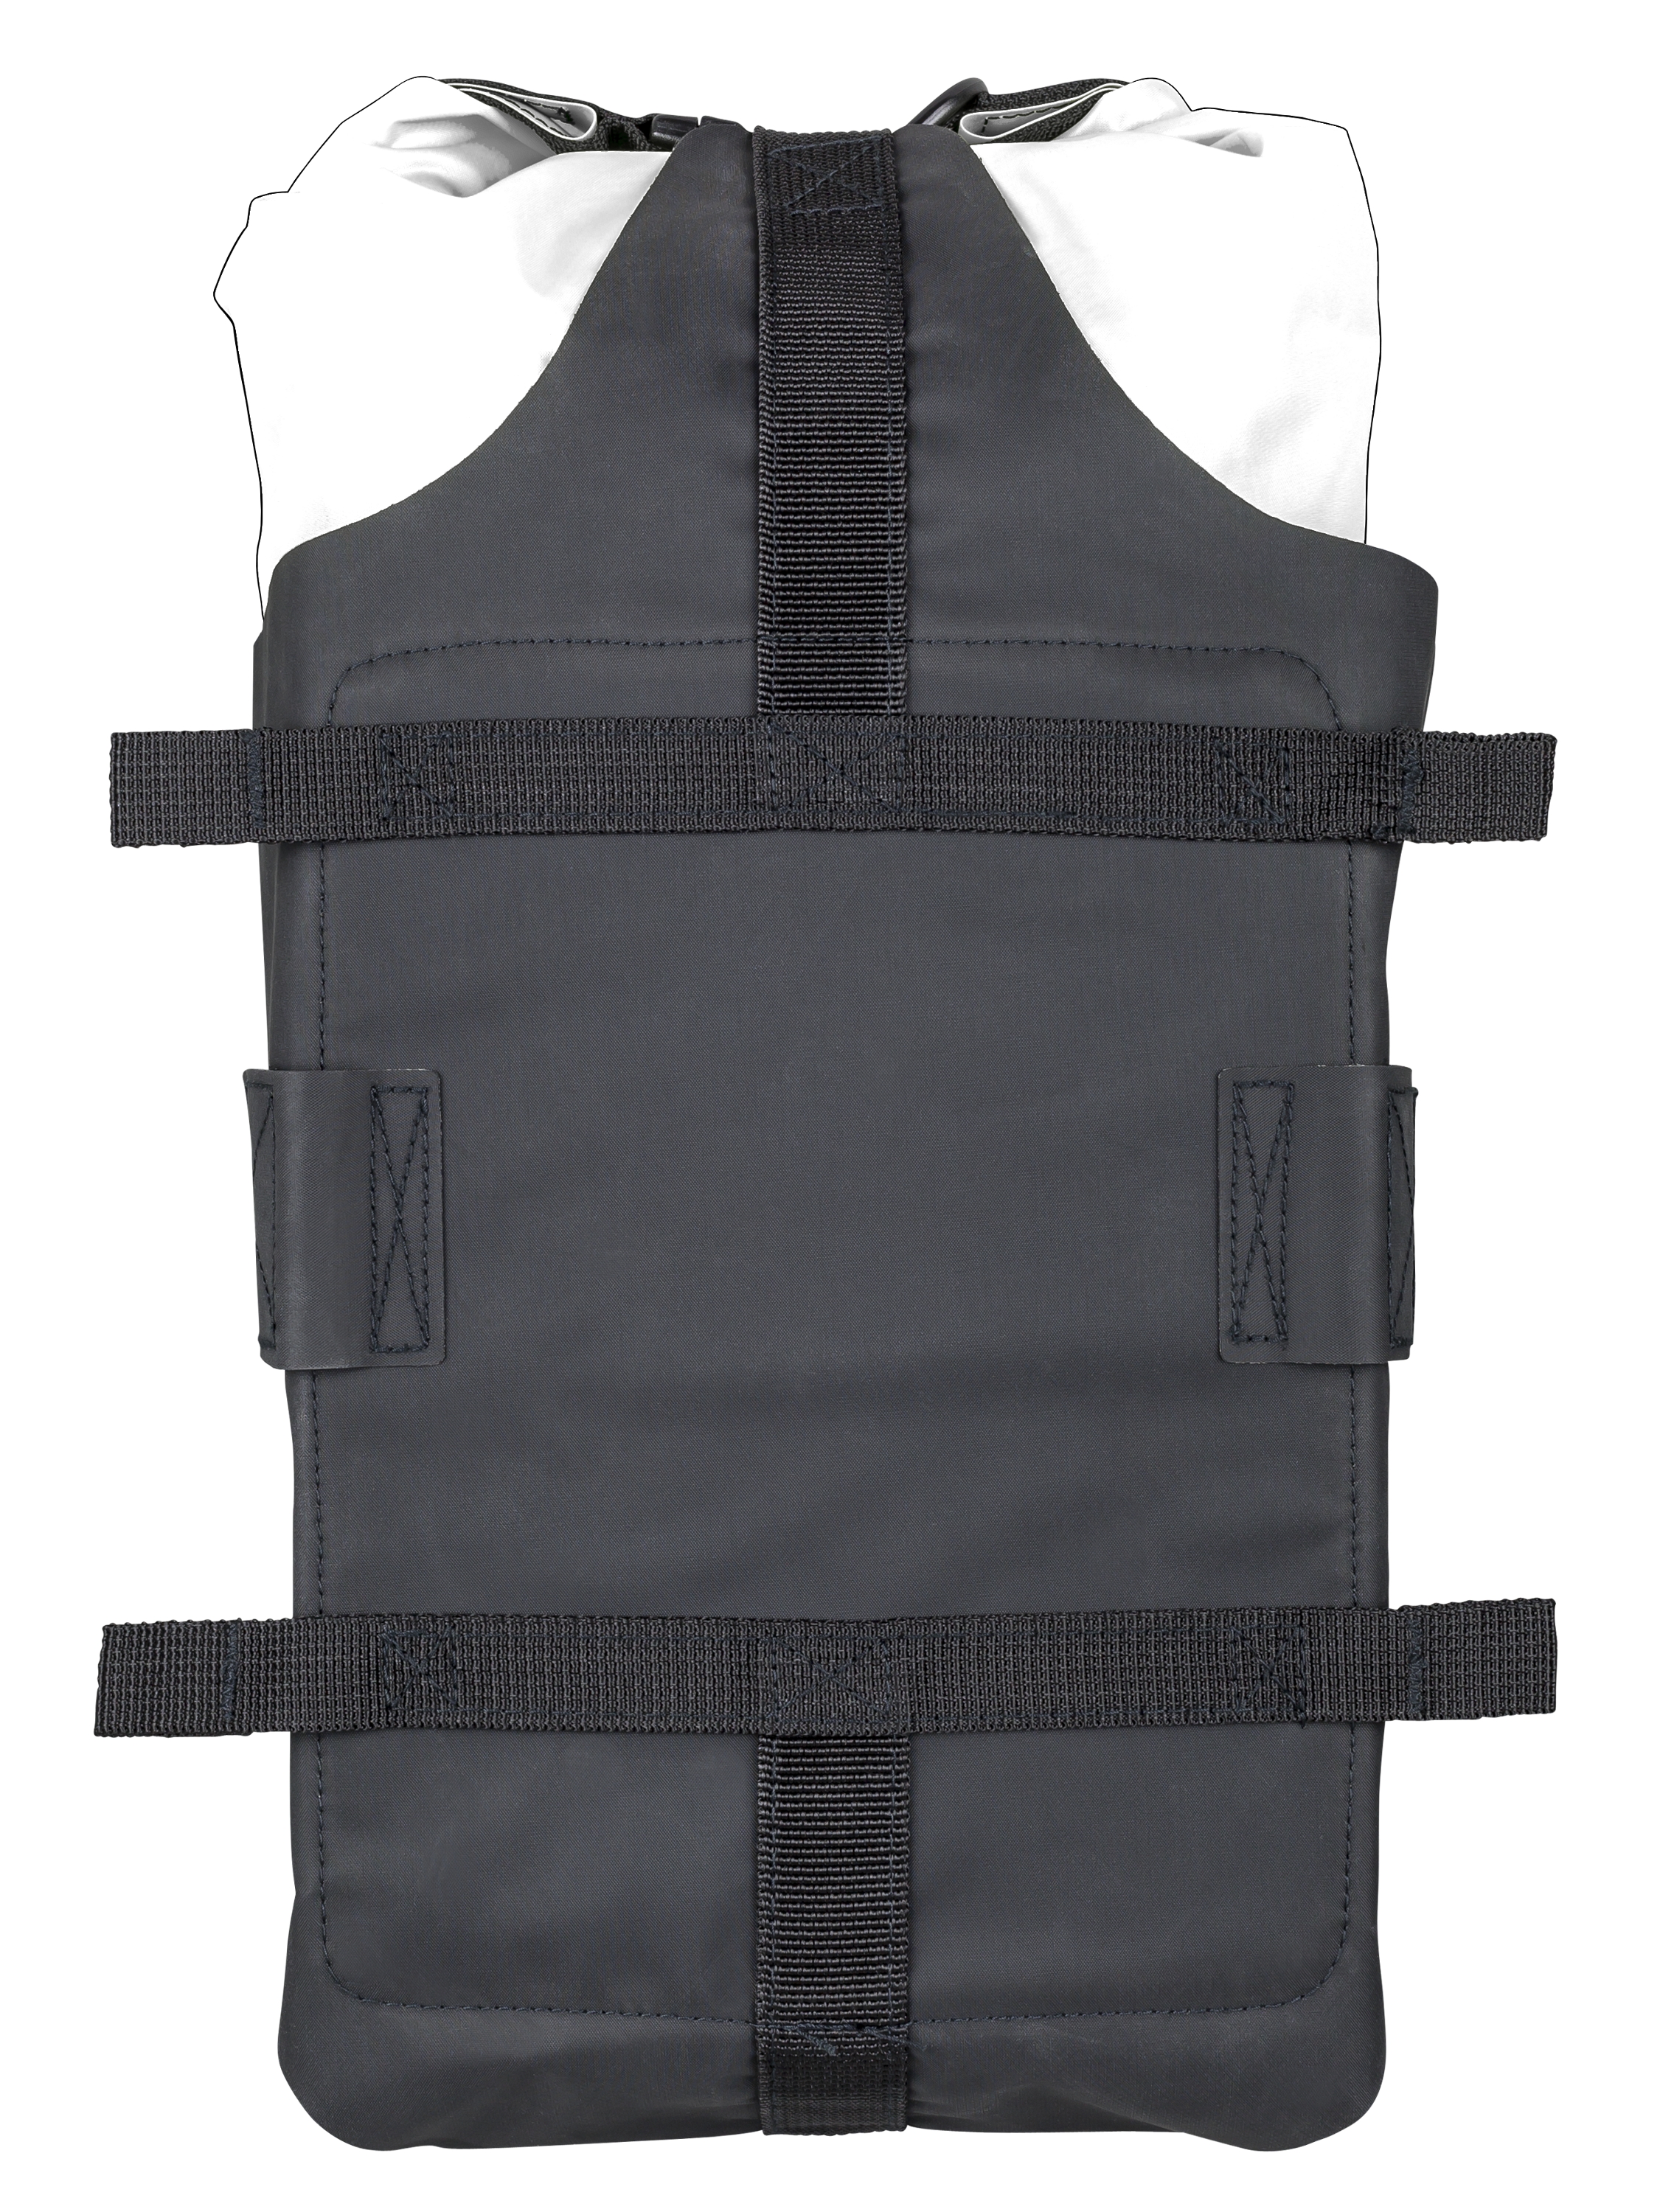 trek 1120 rear bikepacking harness system